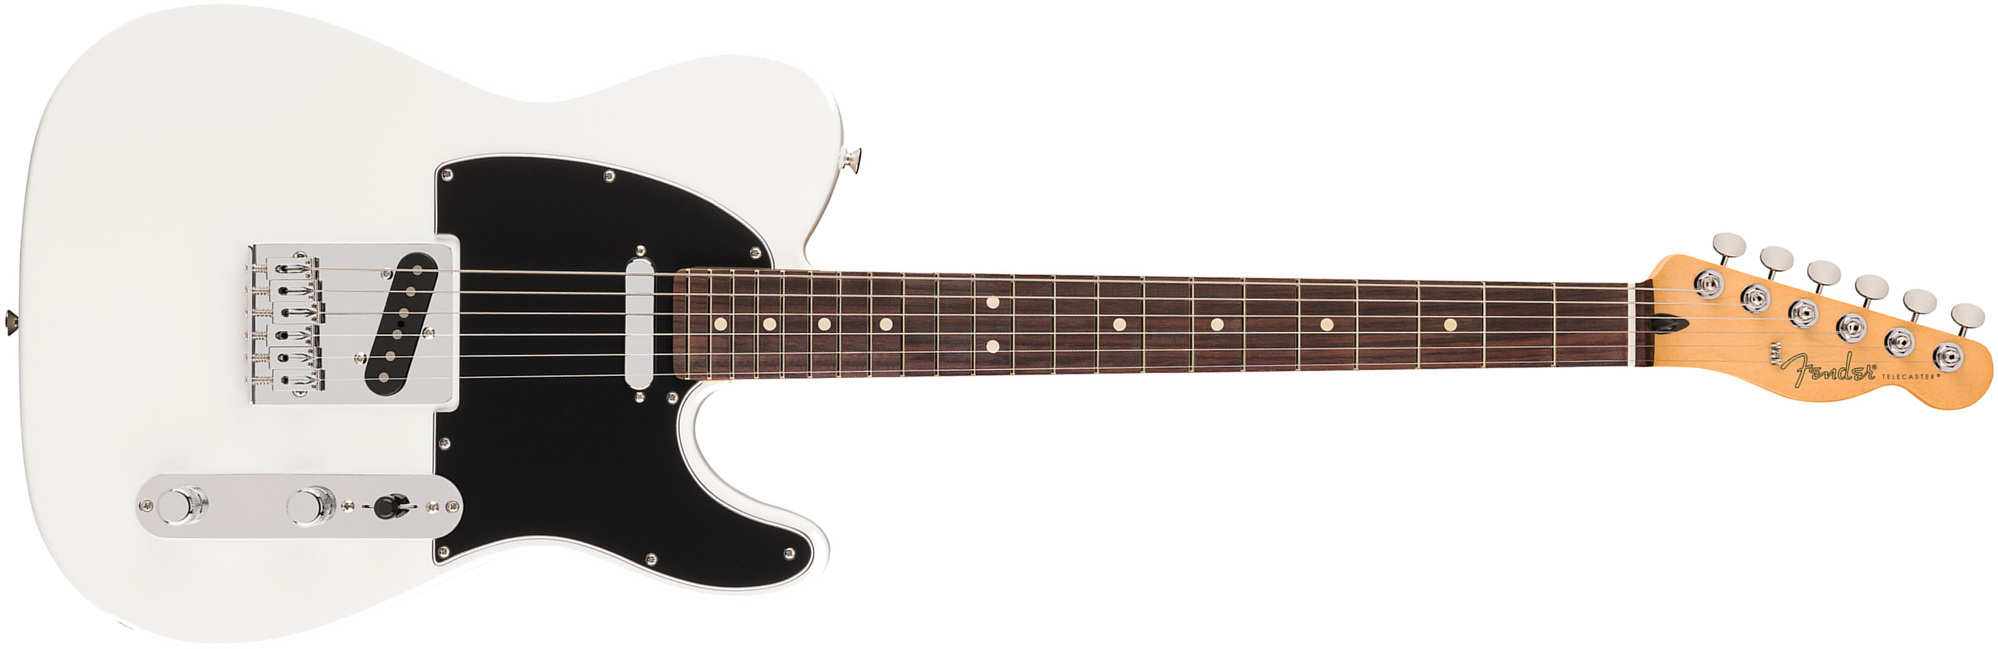 Fender Tele Player Ii Mex Aulne 2s Ht Rw - Polar White - Televorm elektrische gitaar - Main picture